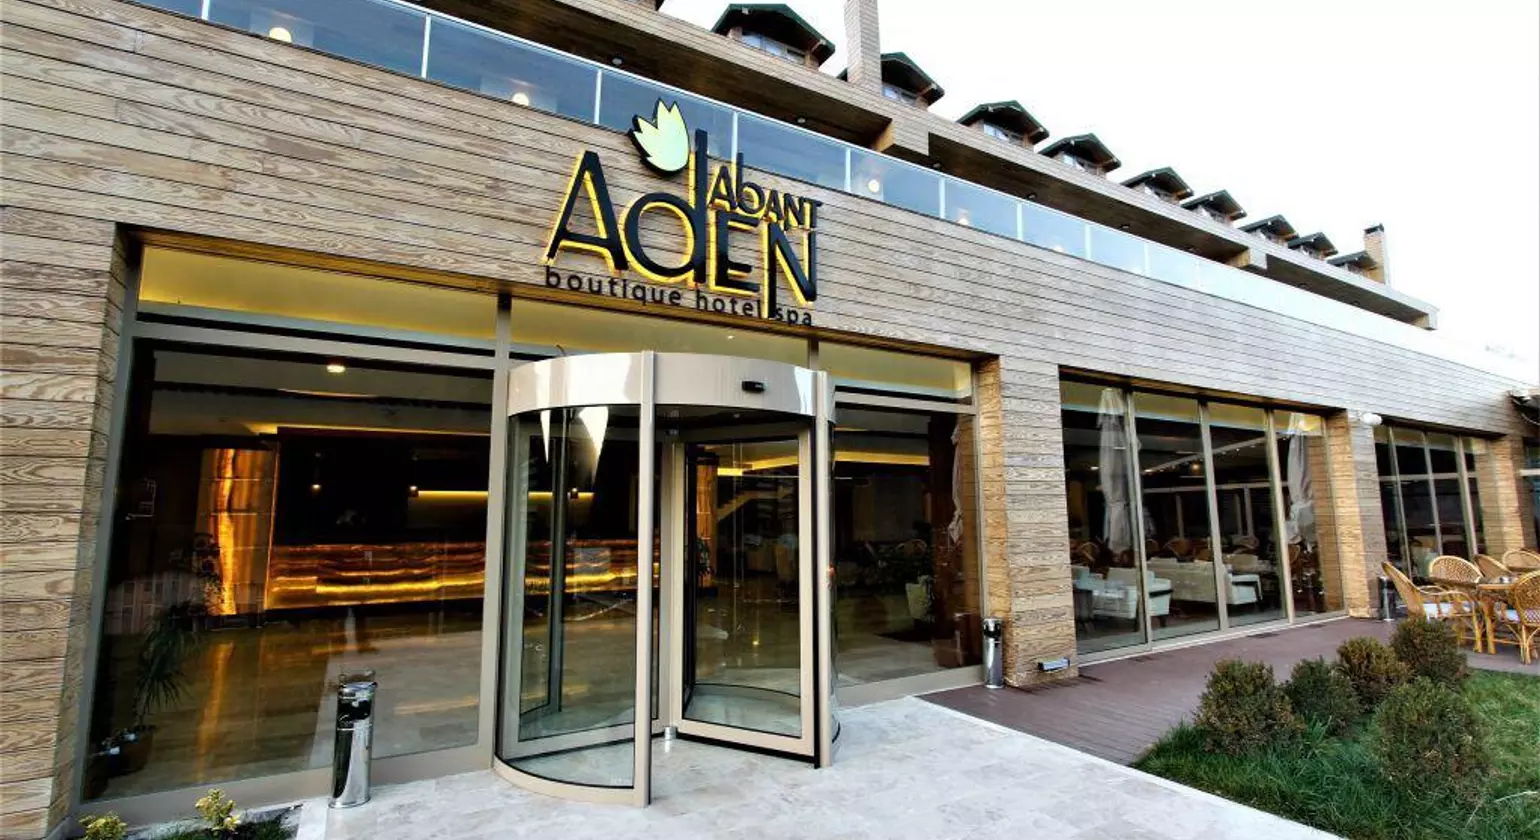 Abant Aden Boutique Hotel & Spa